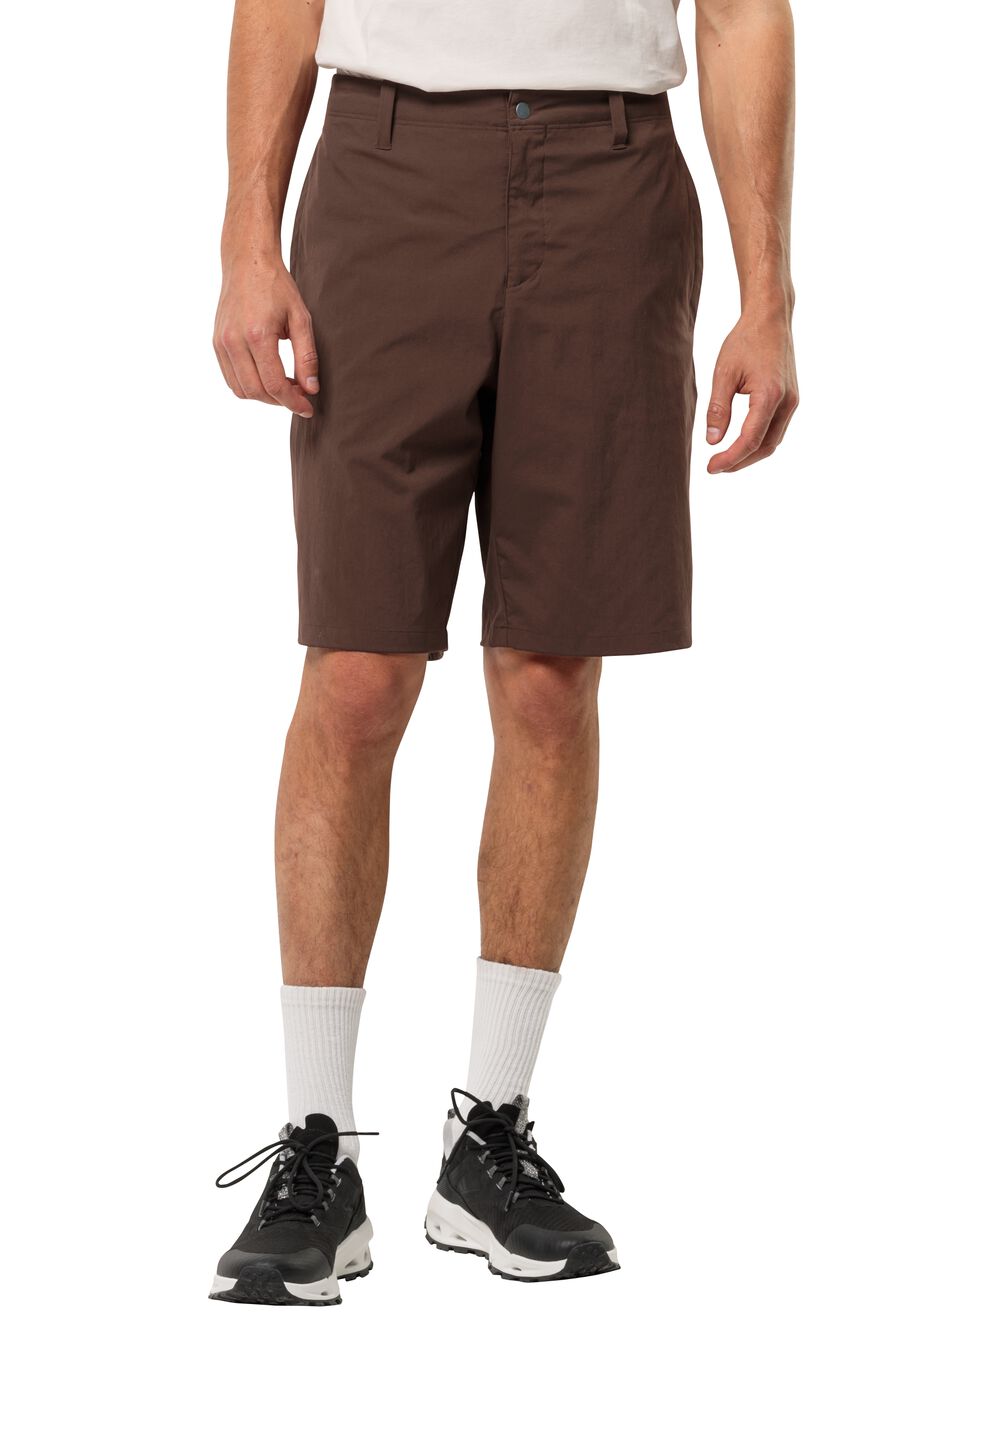 Jack Wolfskin Desert Shorts Men Korte broek Heren 54 bruin dark mahogany